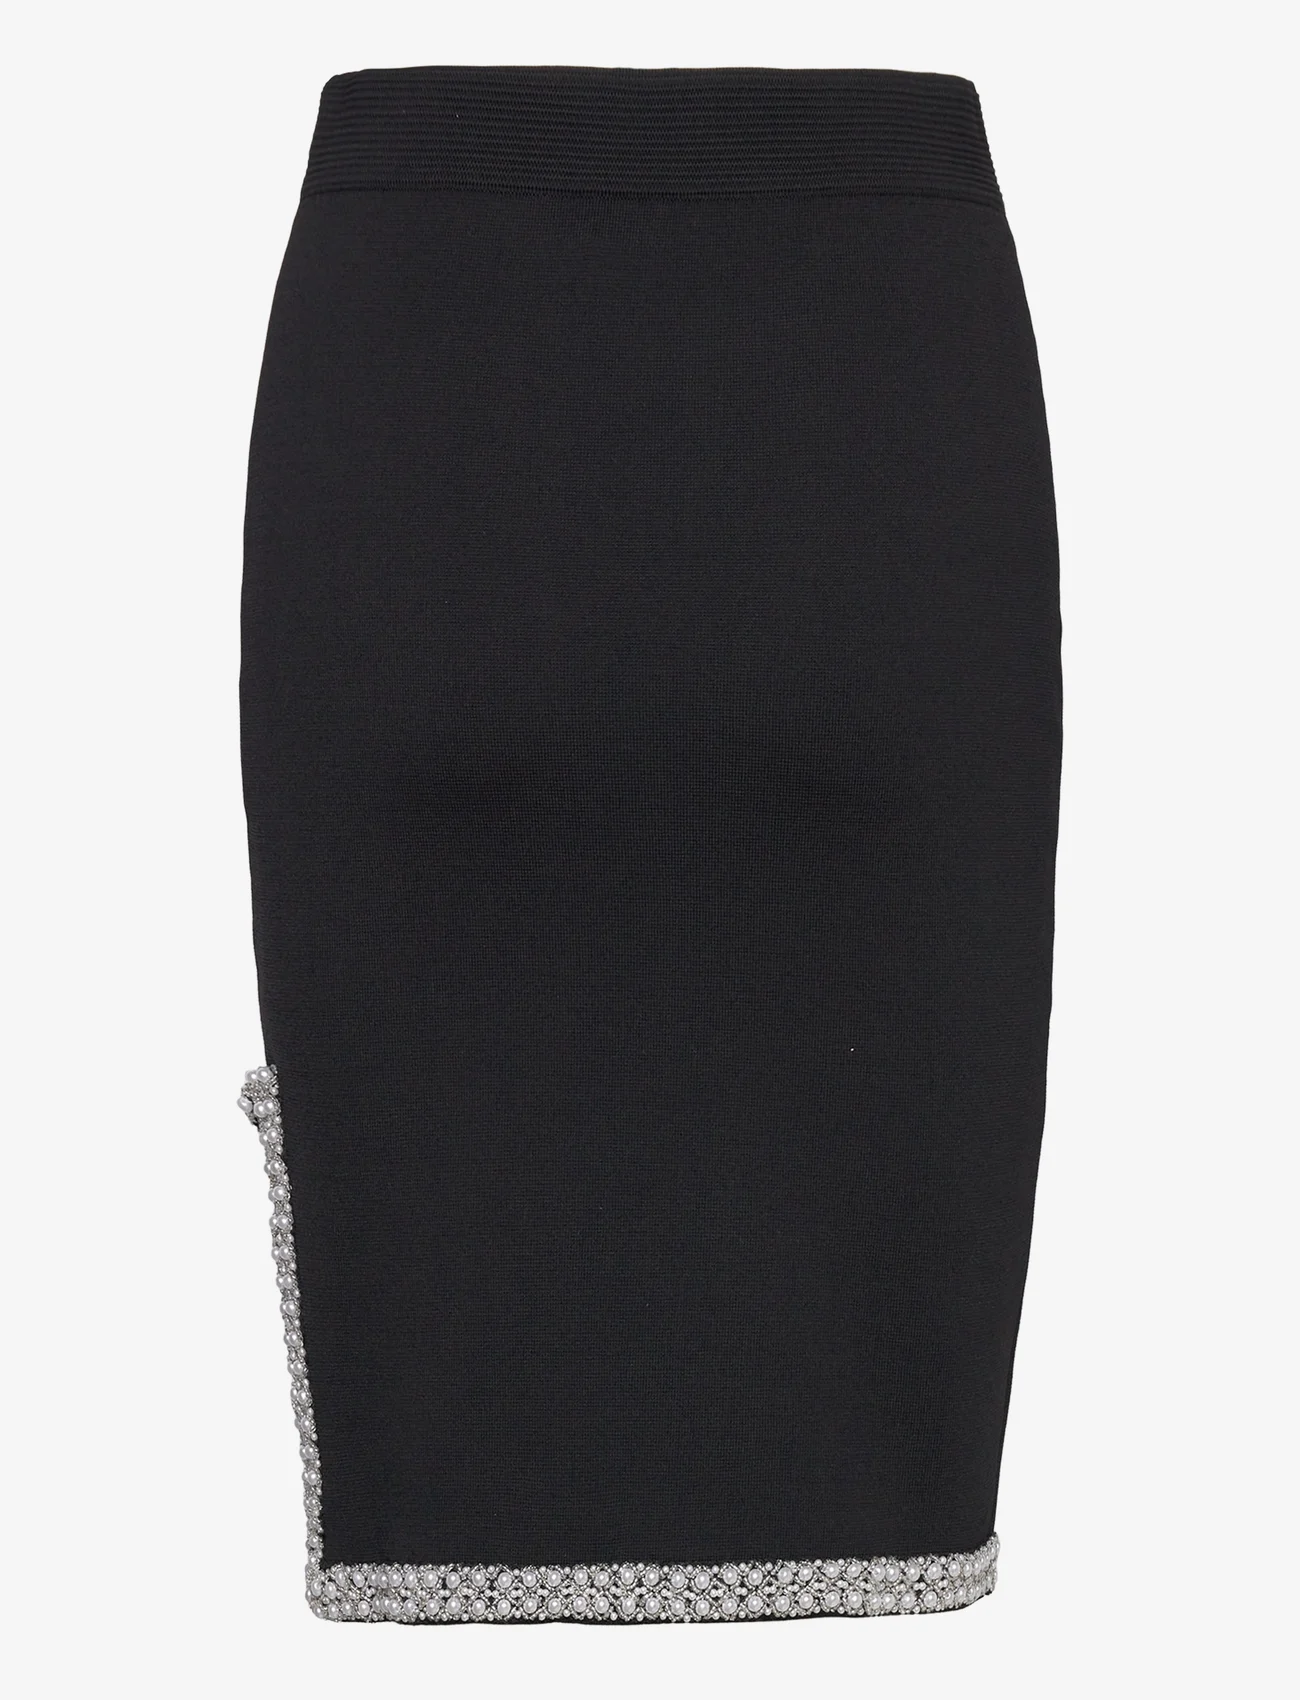 Karl Lagerfeld - fashion knit skirt - adīti svārki - black - 1